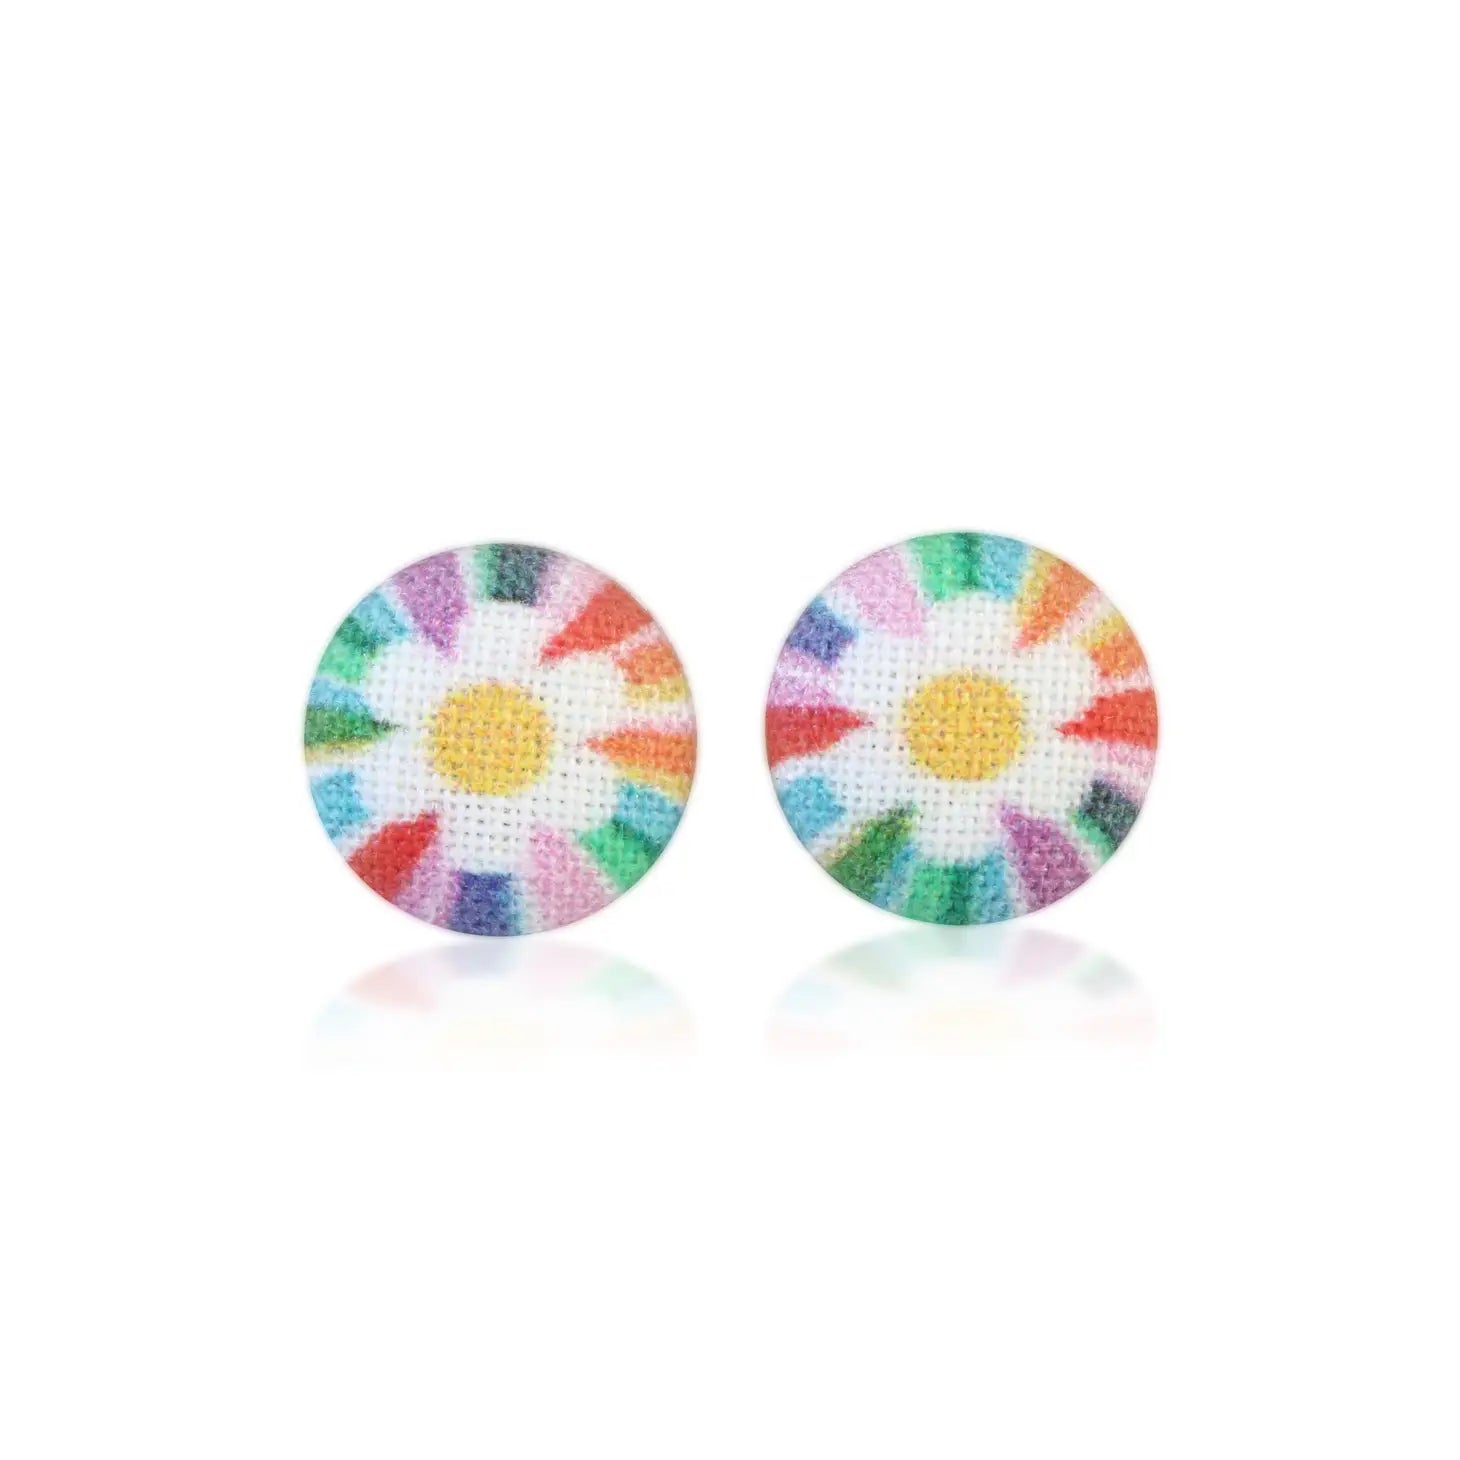 Daisy Kaleidoscope Fabric Button Earrings | Handmade in the US